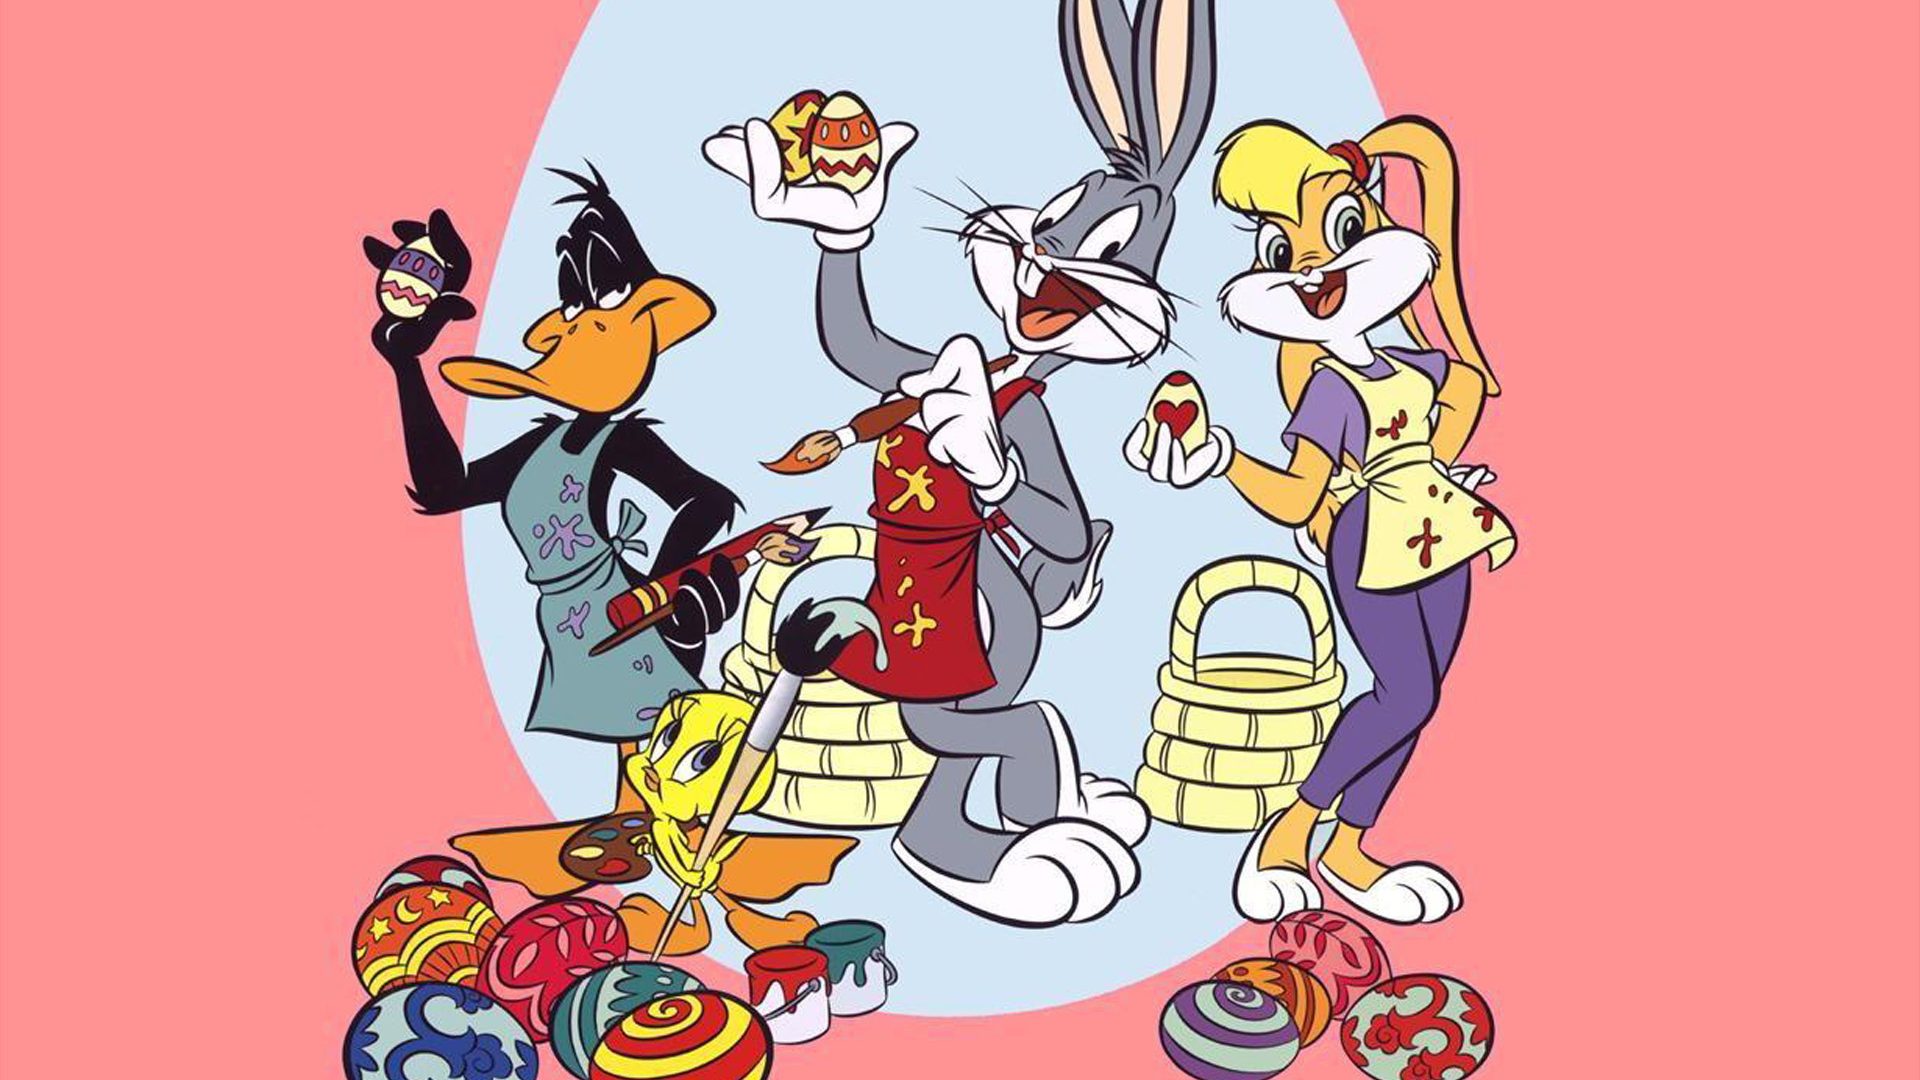 Coloring Easter Eggs Bugs Bunny And Lola Bunny Cartoon Looney Tunes Desktop HD Wallpaper 1920x1200, Wallpaper13.com